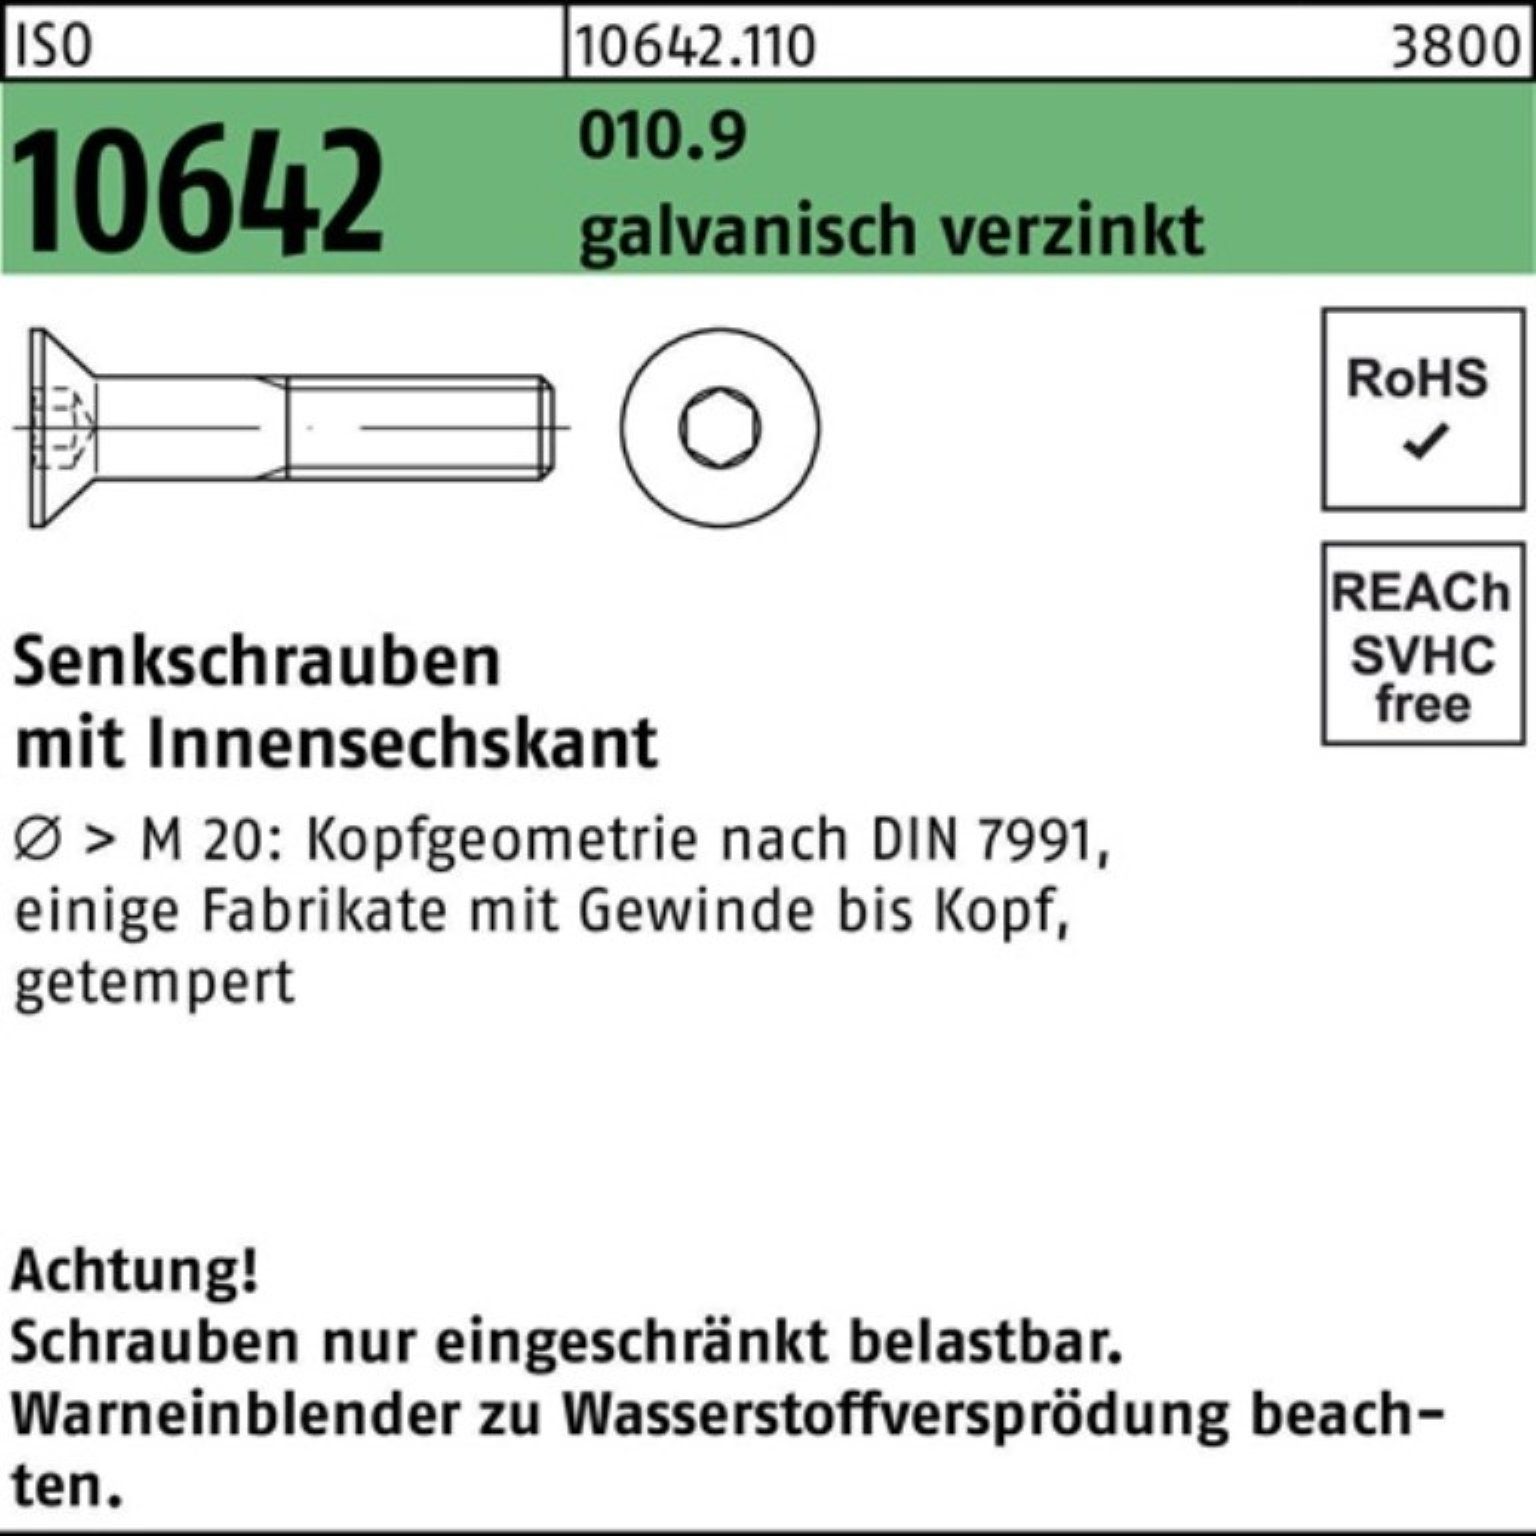 Reyher Senkschraube Pack ISO 10642 Innen-6kt Senkschraube 55 galv.verz. 200er 010.9 20 M6x